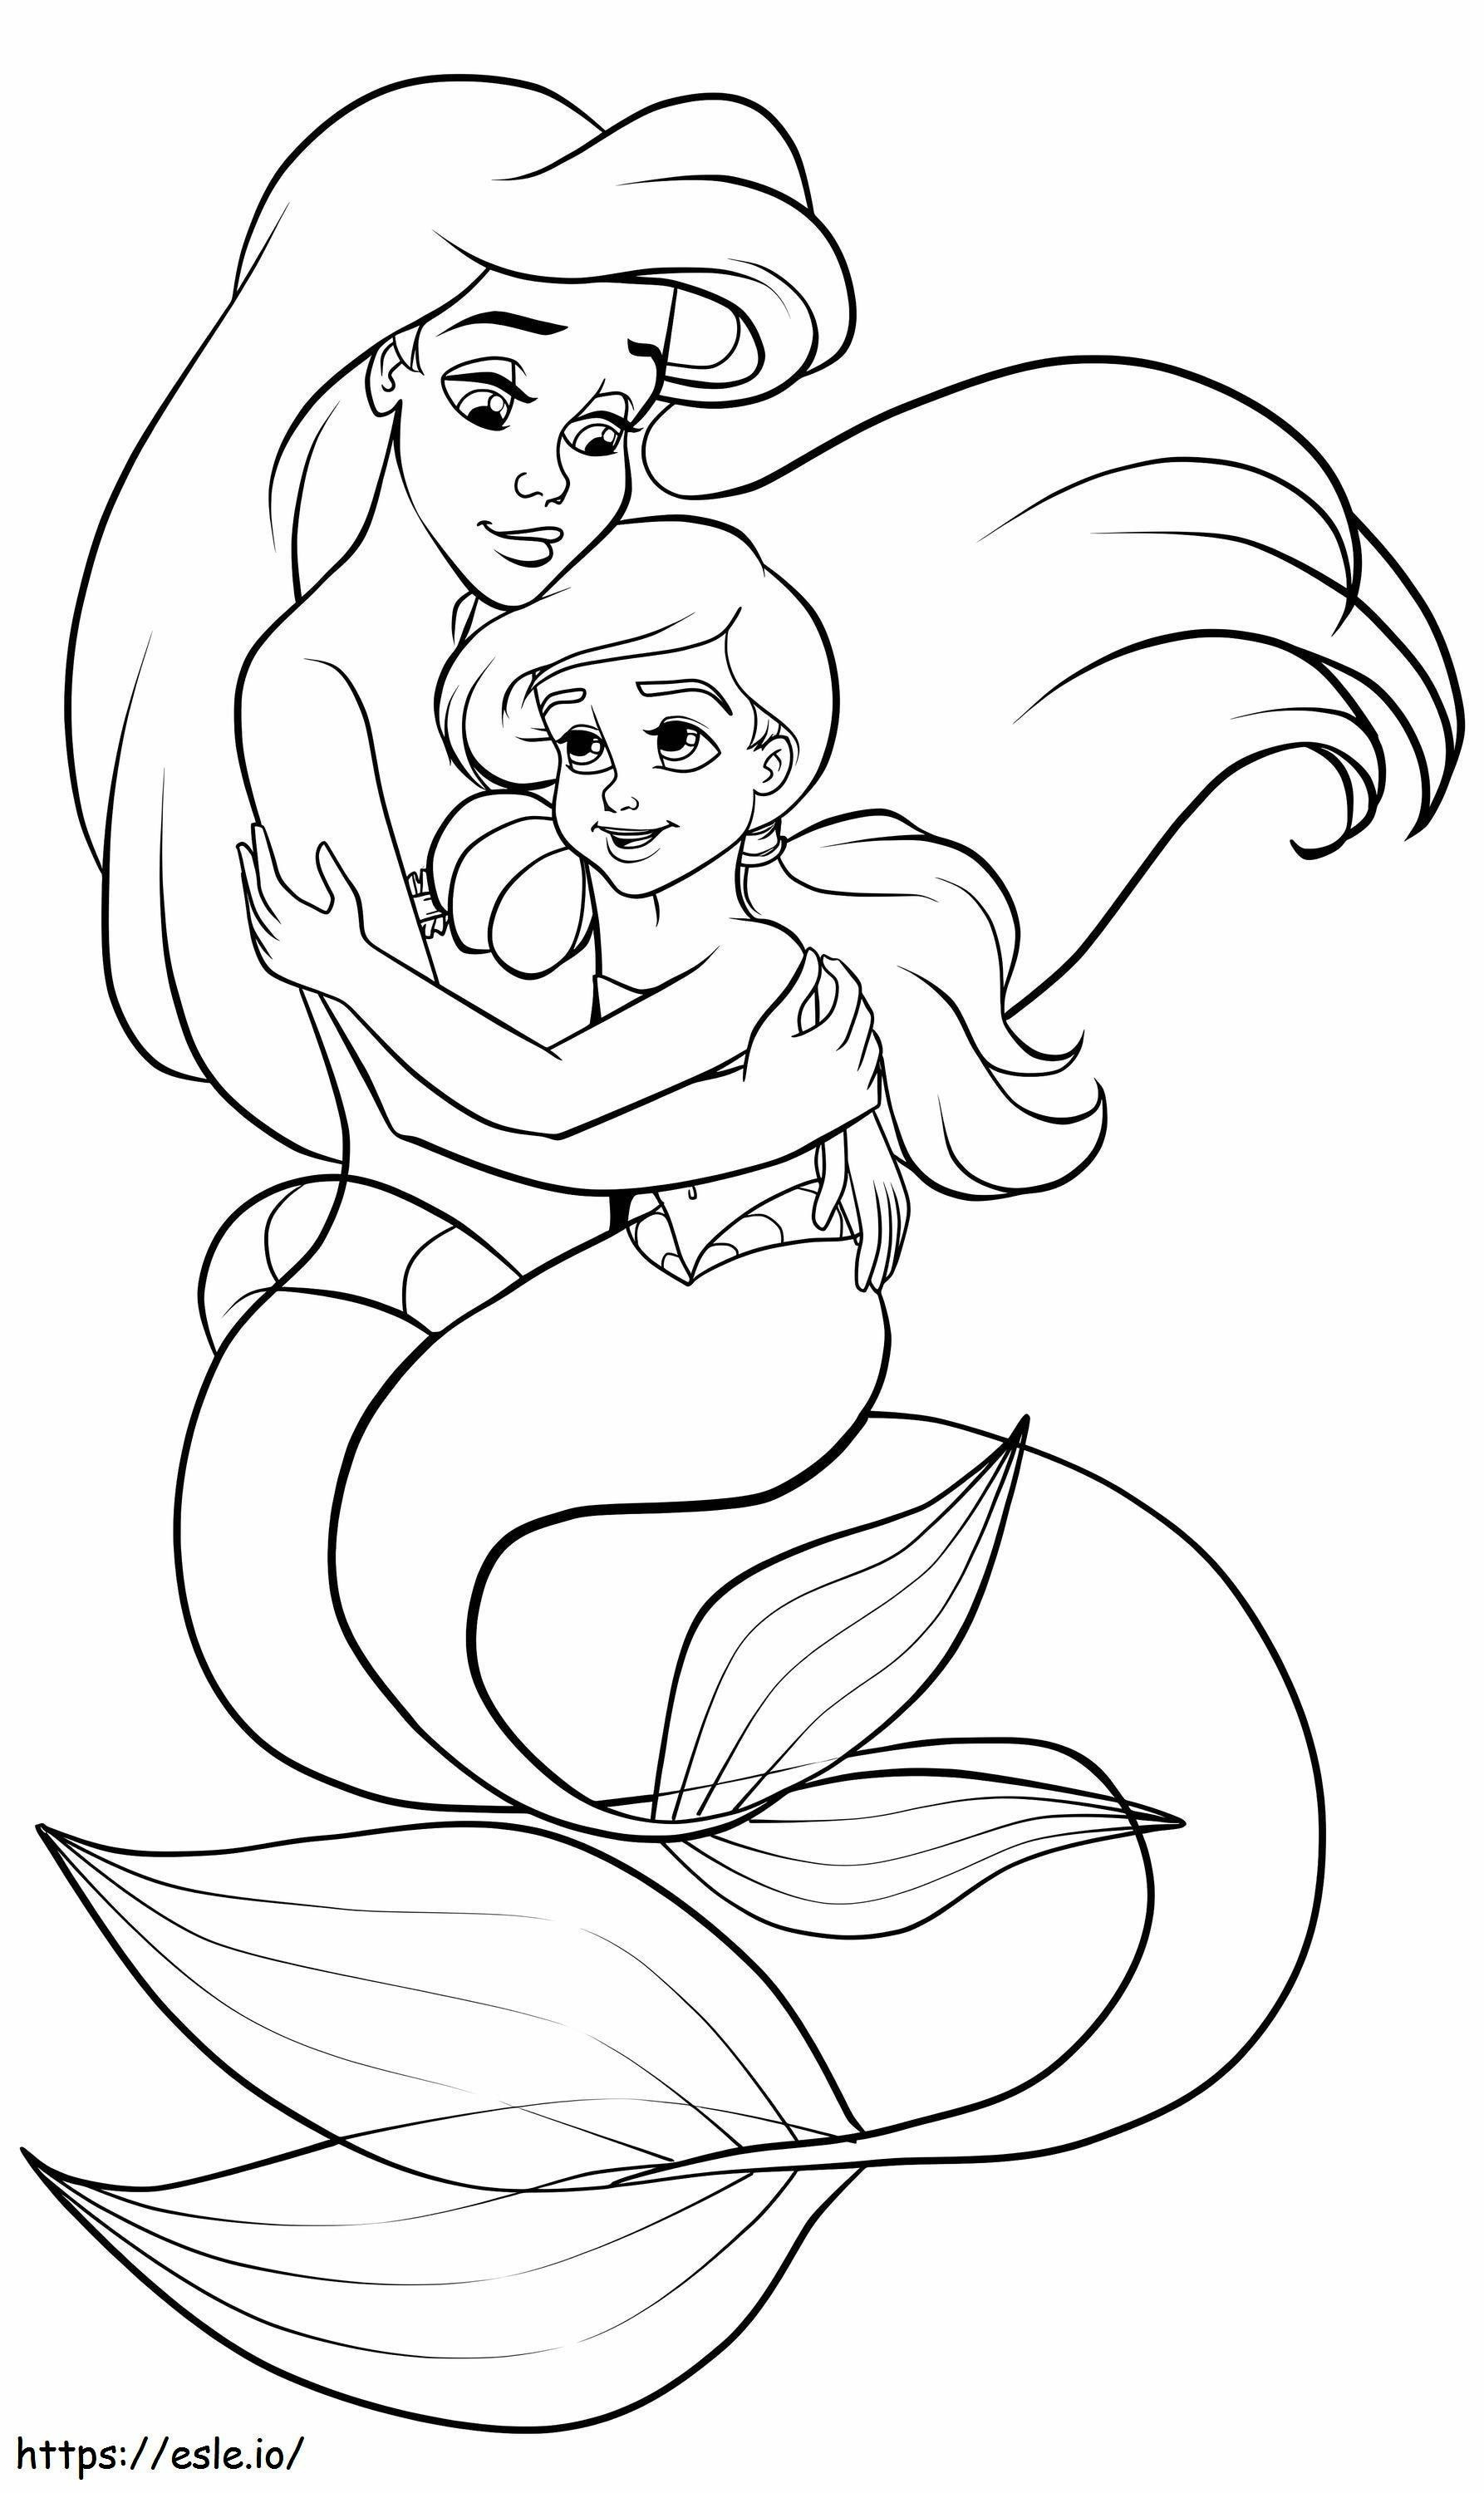 Two Mermaids Hugging coloring page